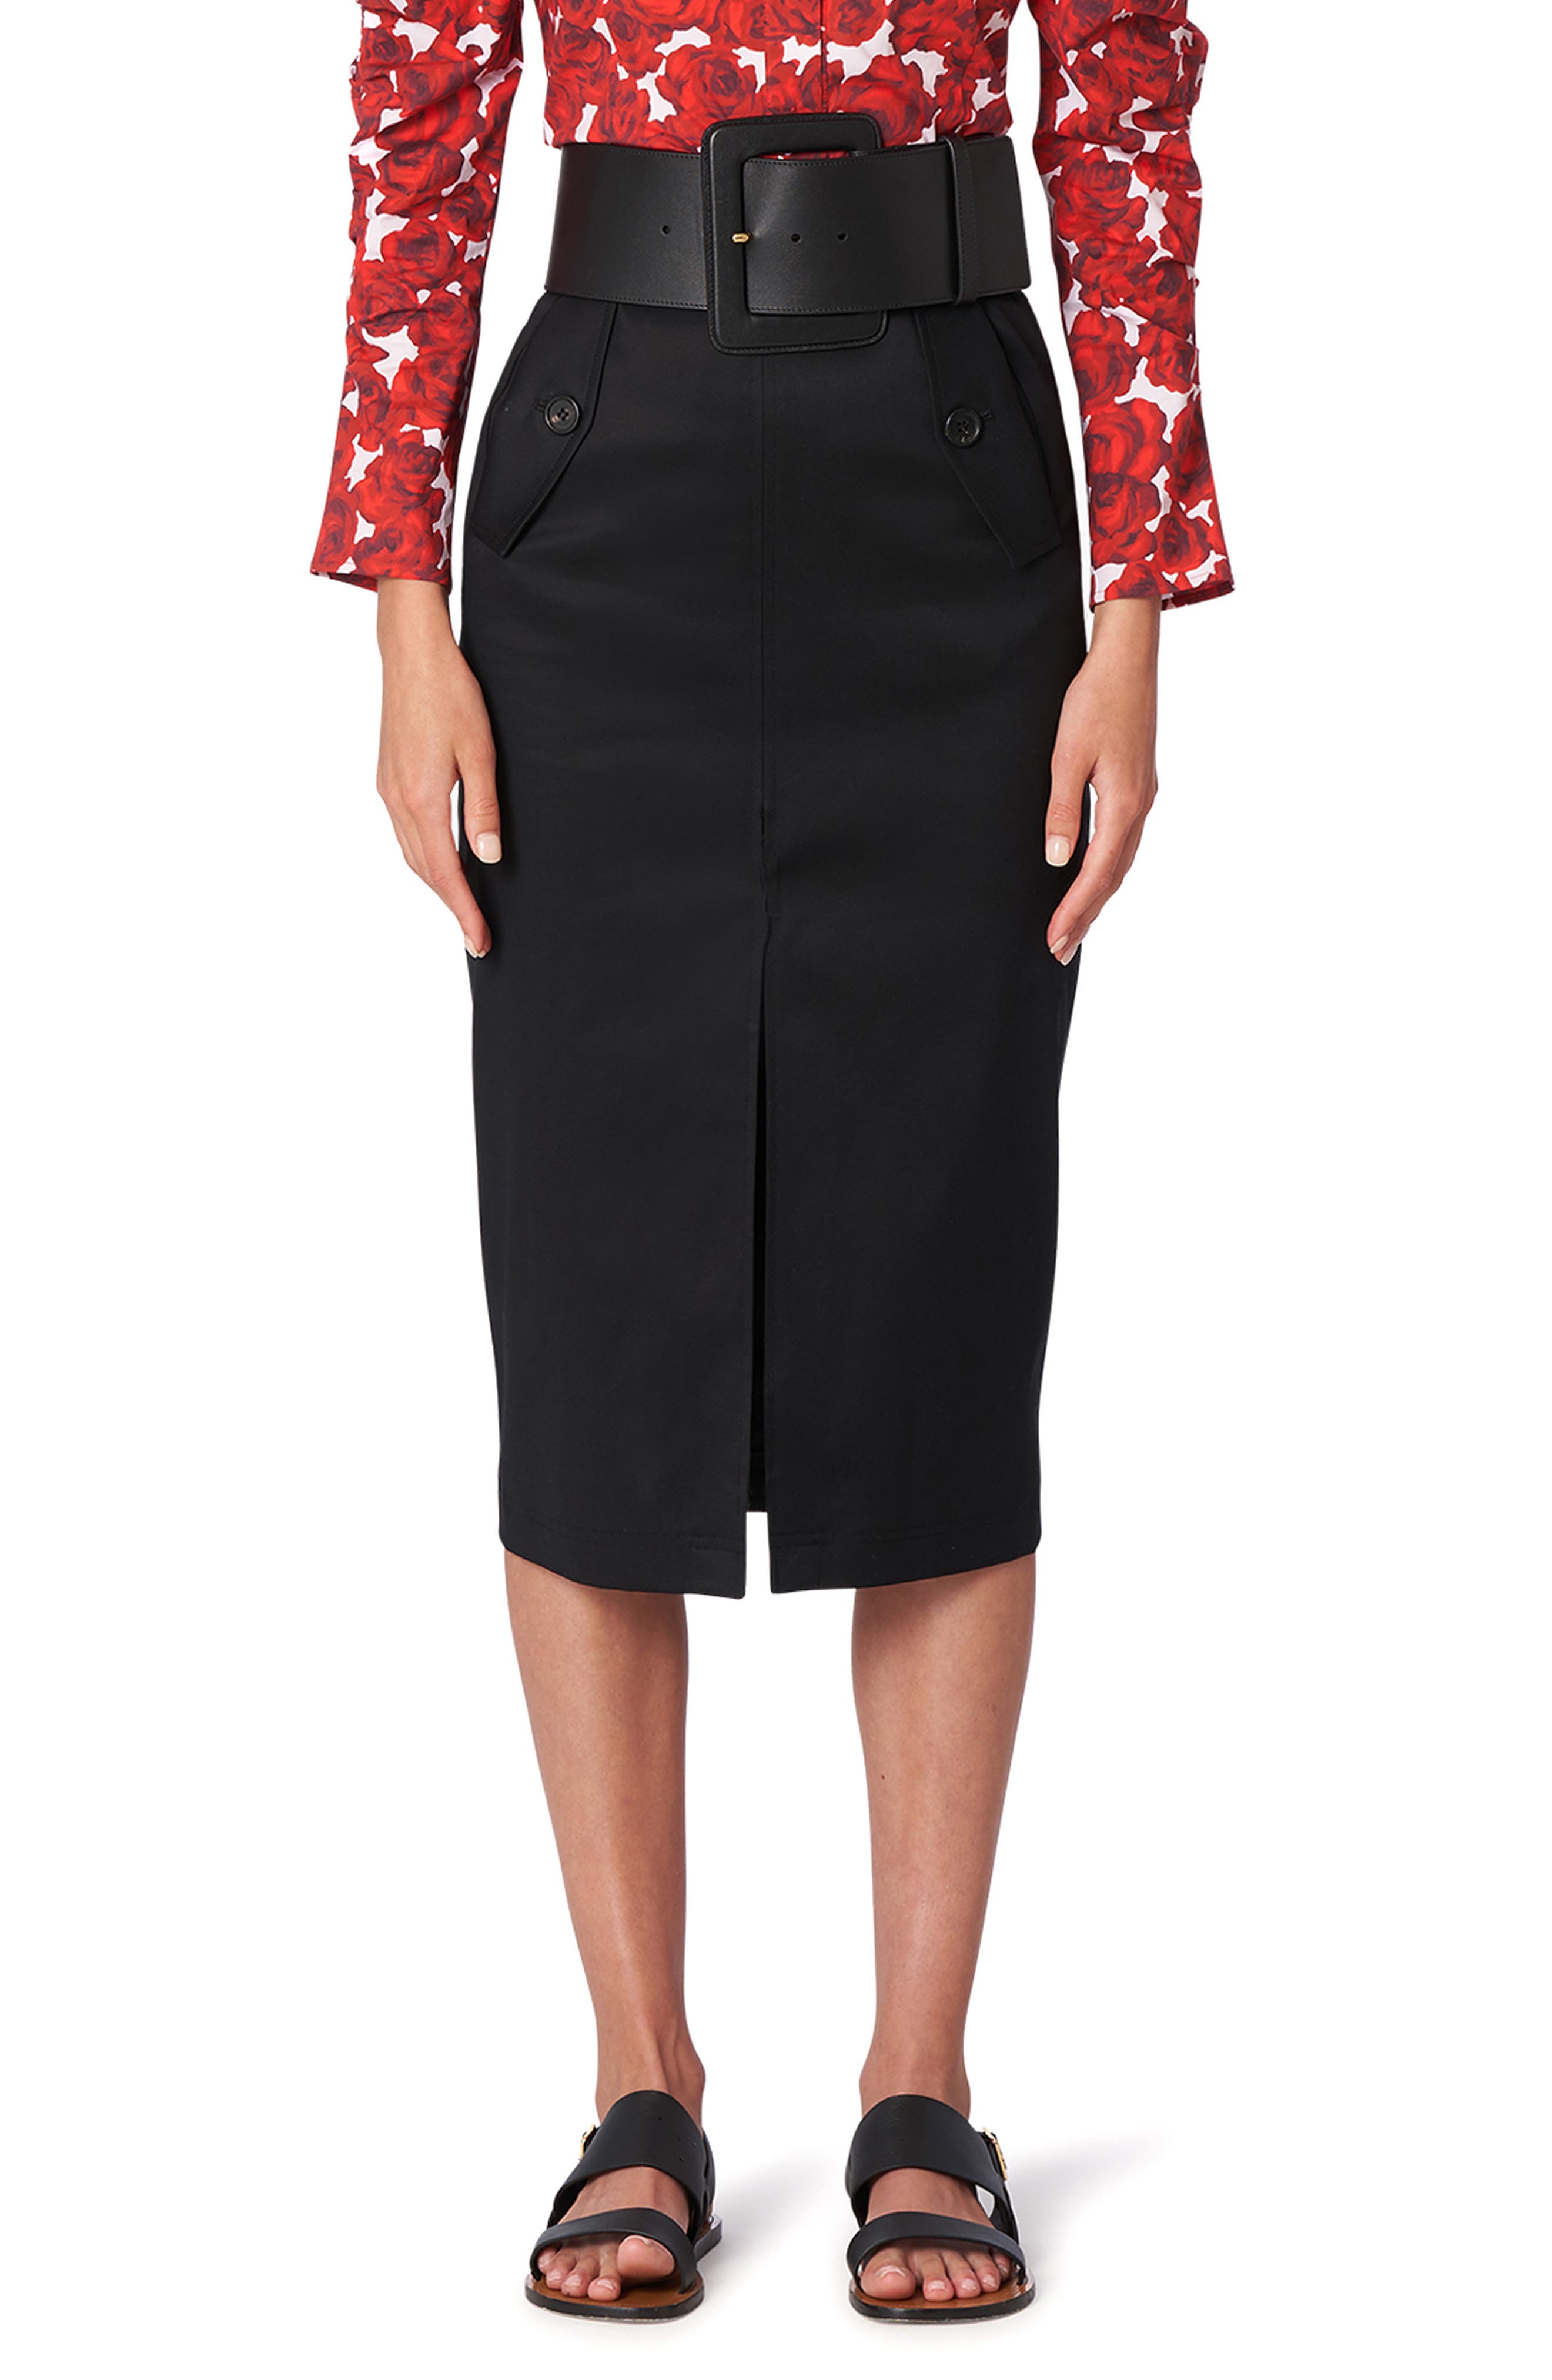 Carolina Herrera Cotton Blend Pencil Skirt in Black at Nordstrom, Size 0